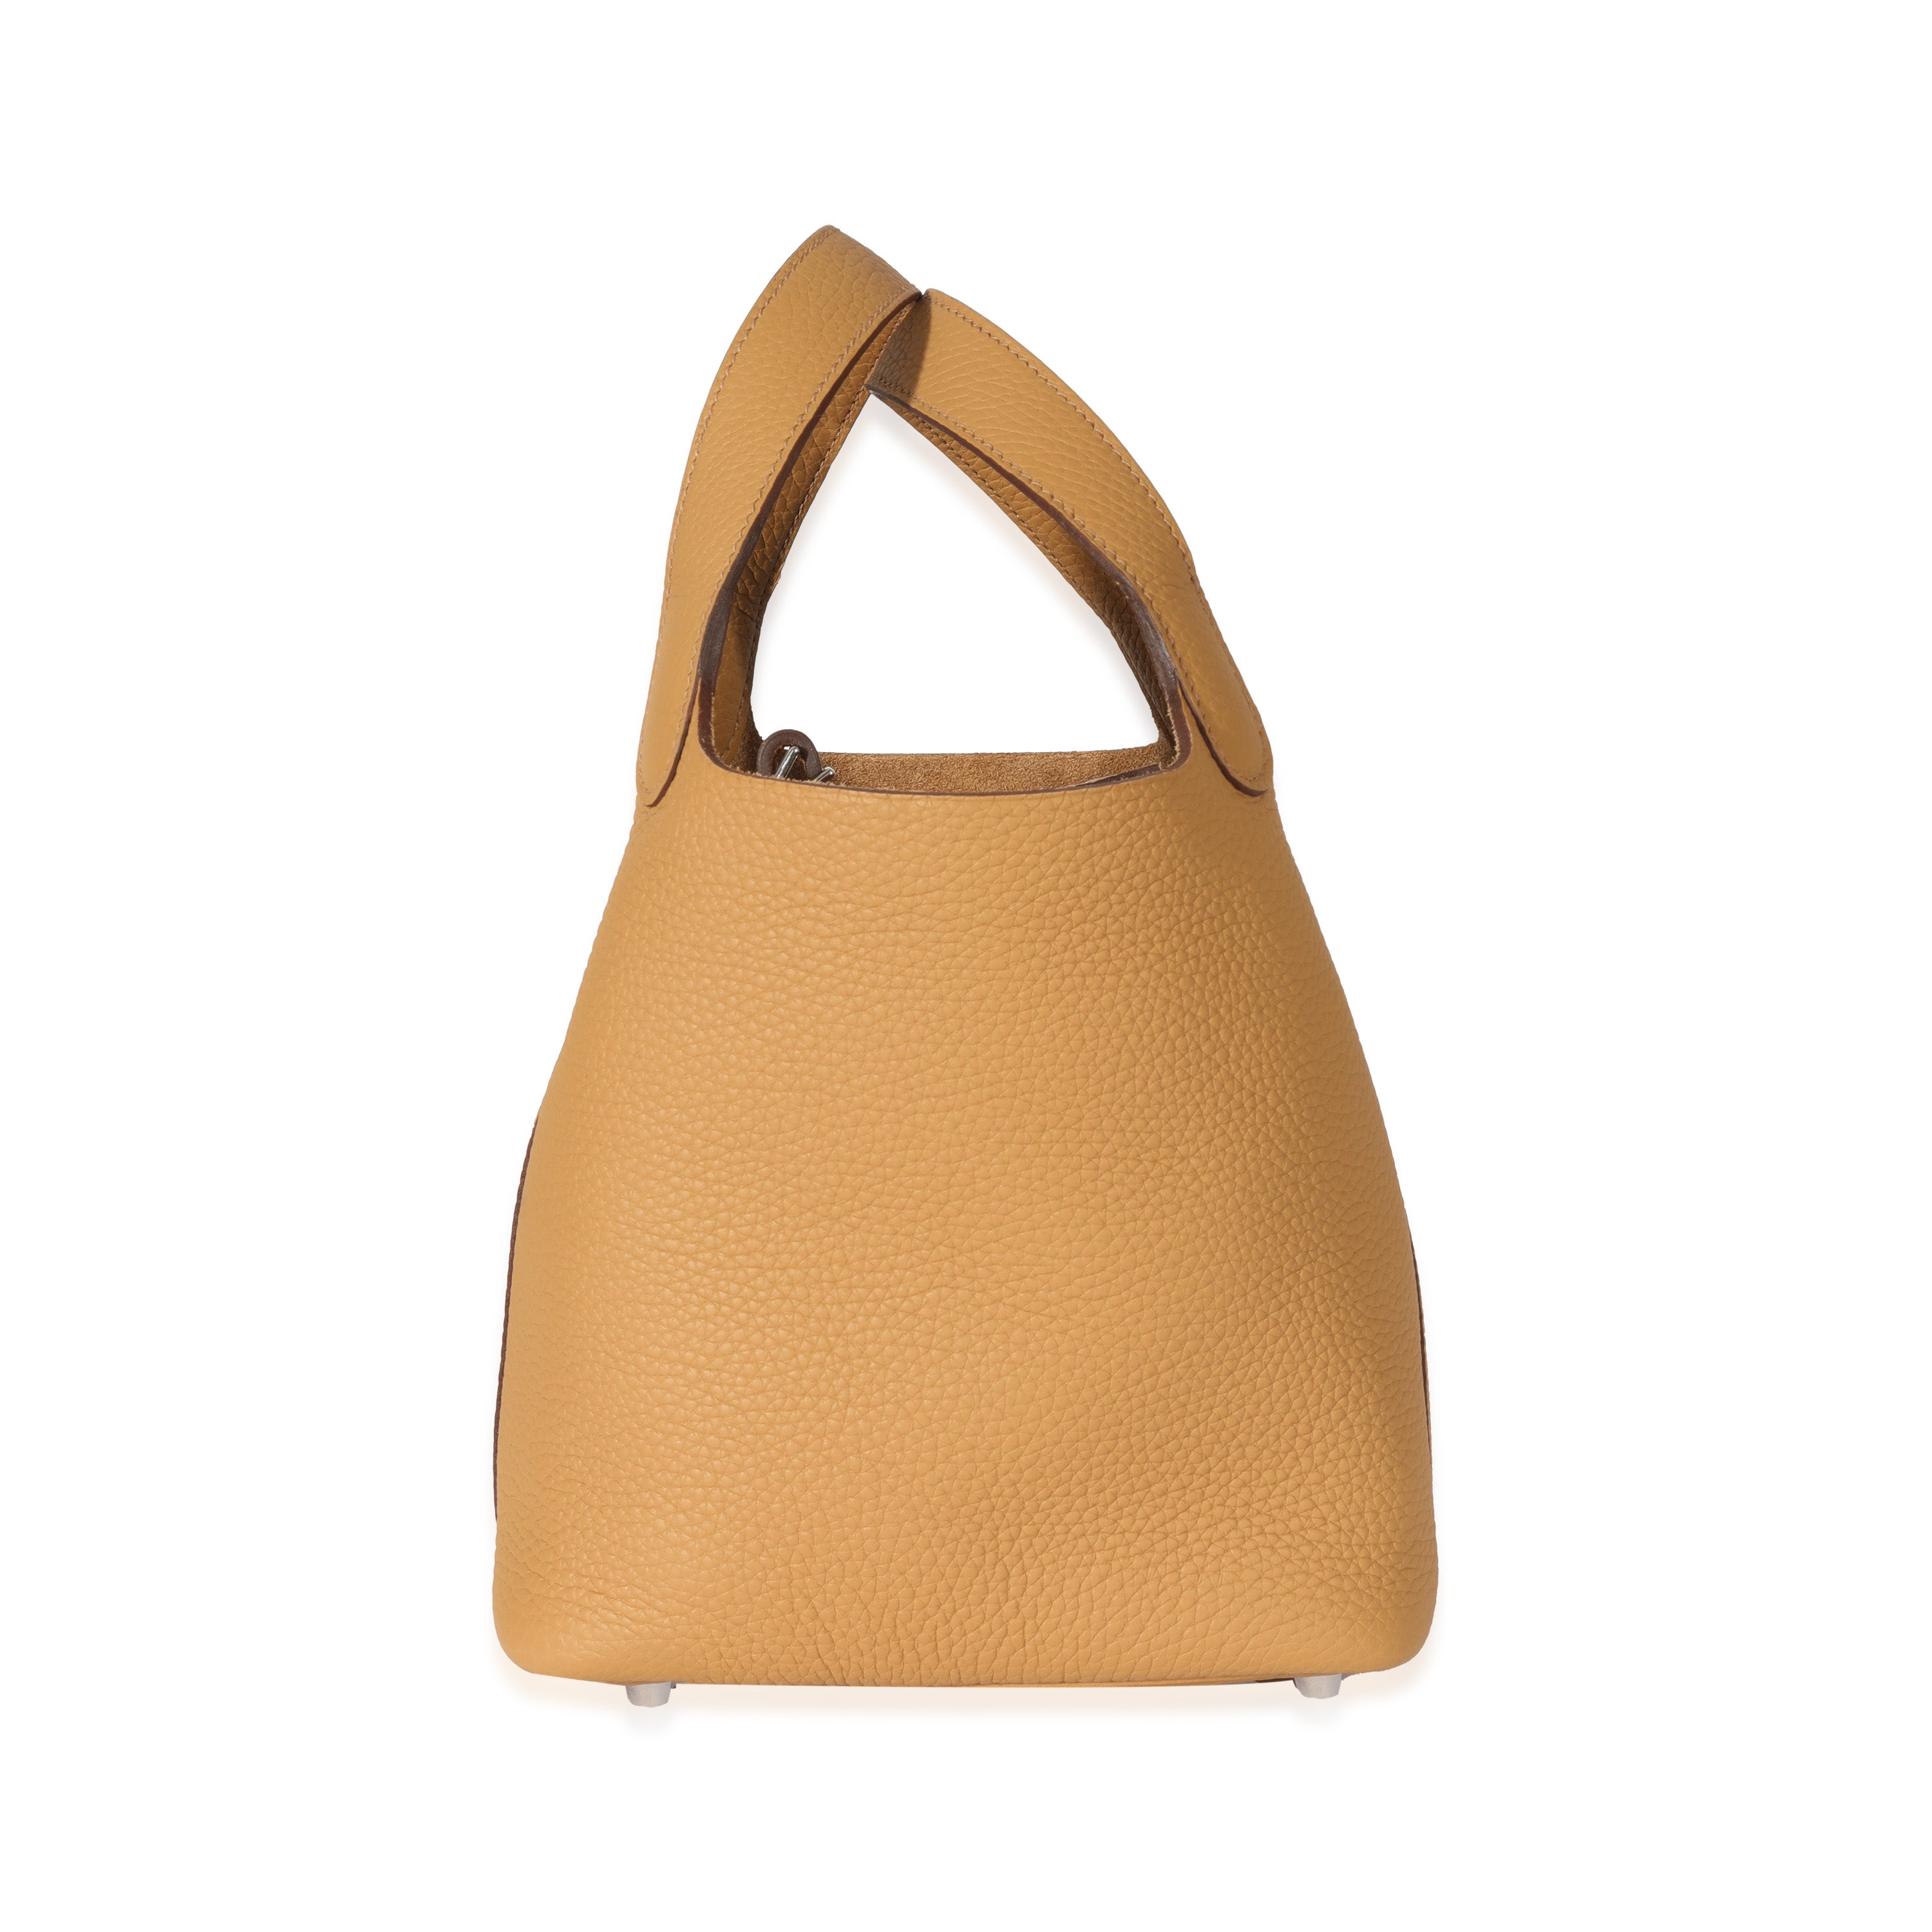 Hermès Authenticated Picotin Leather Handbag